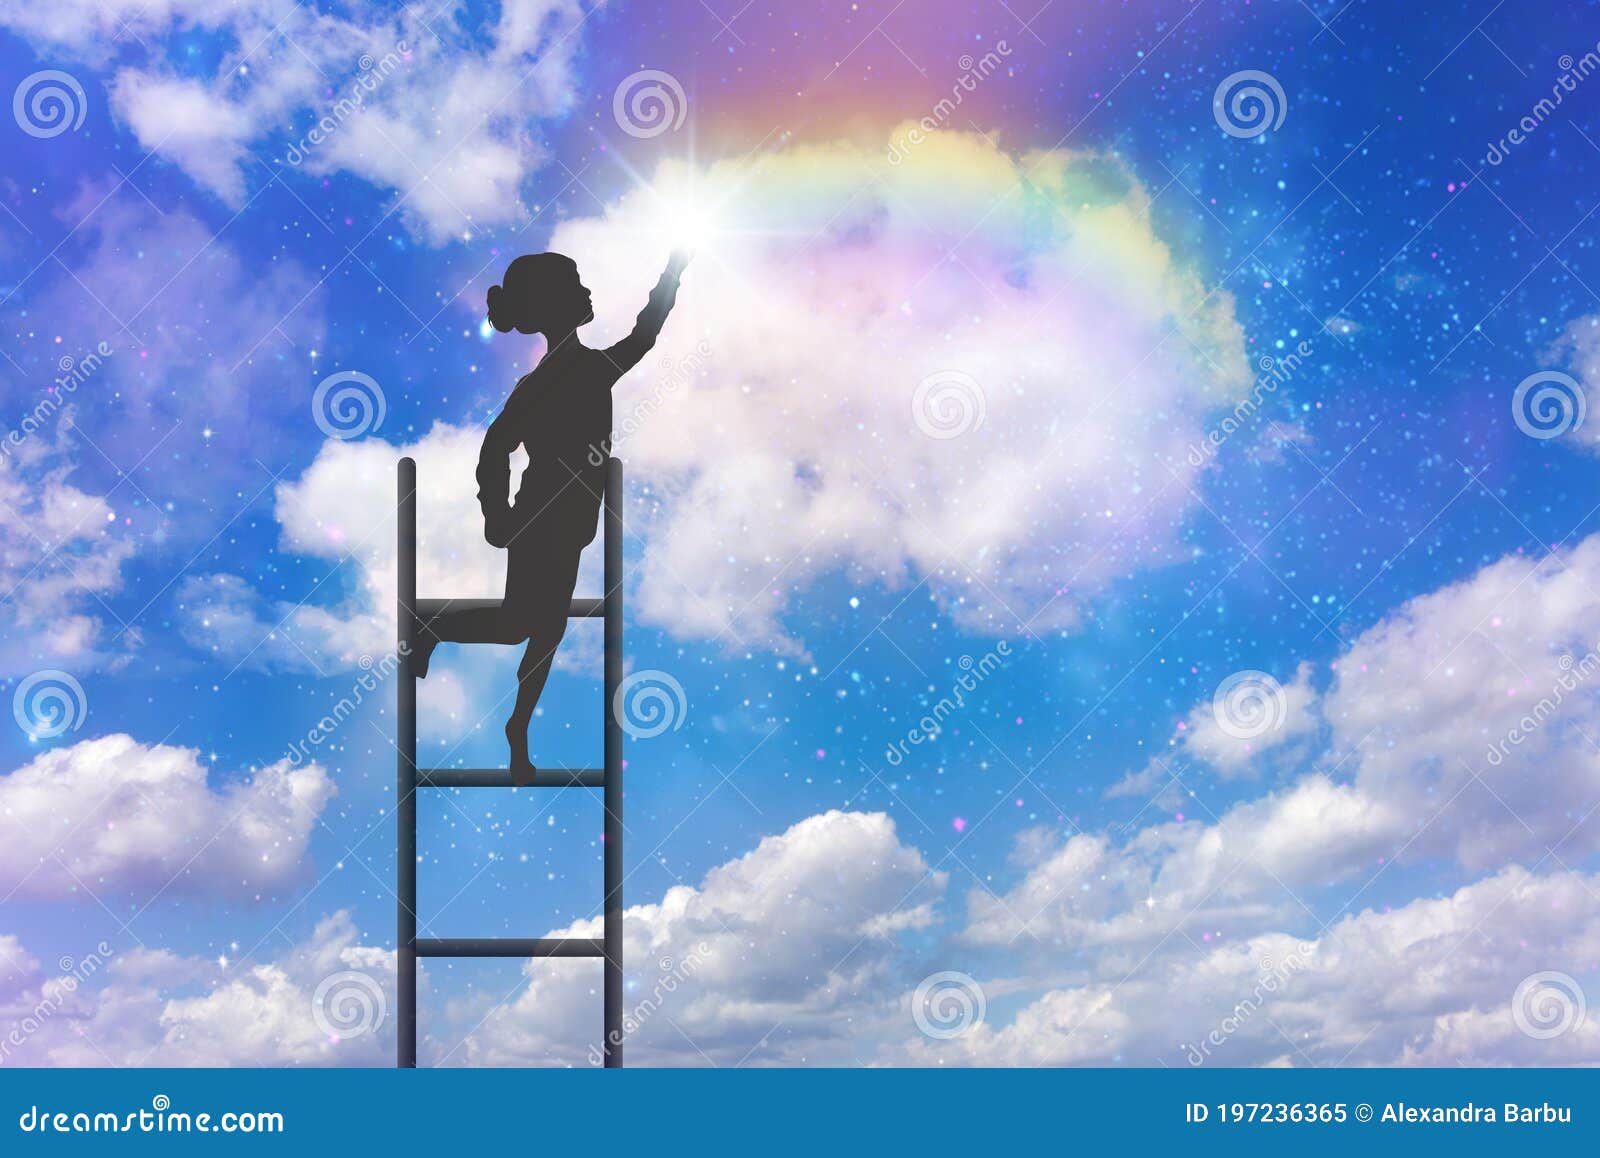 climbing, stairway to heaven, dreams, hope, rainbow